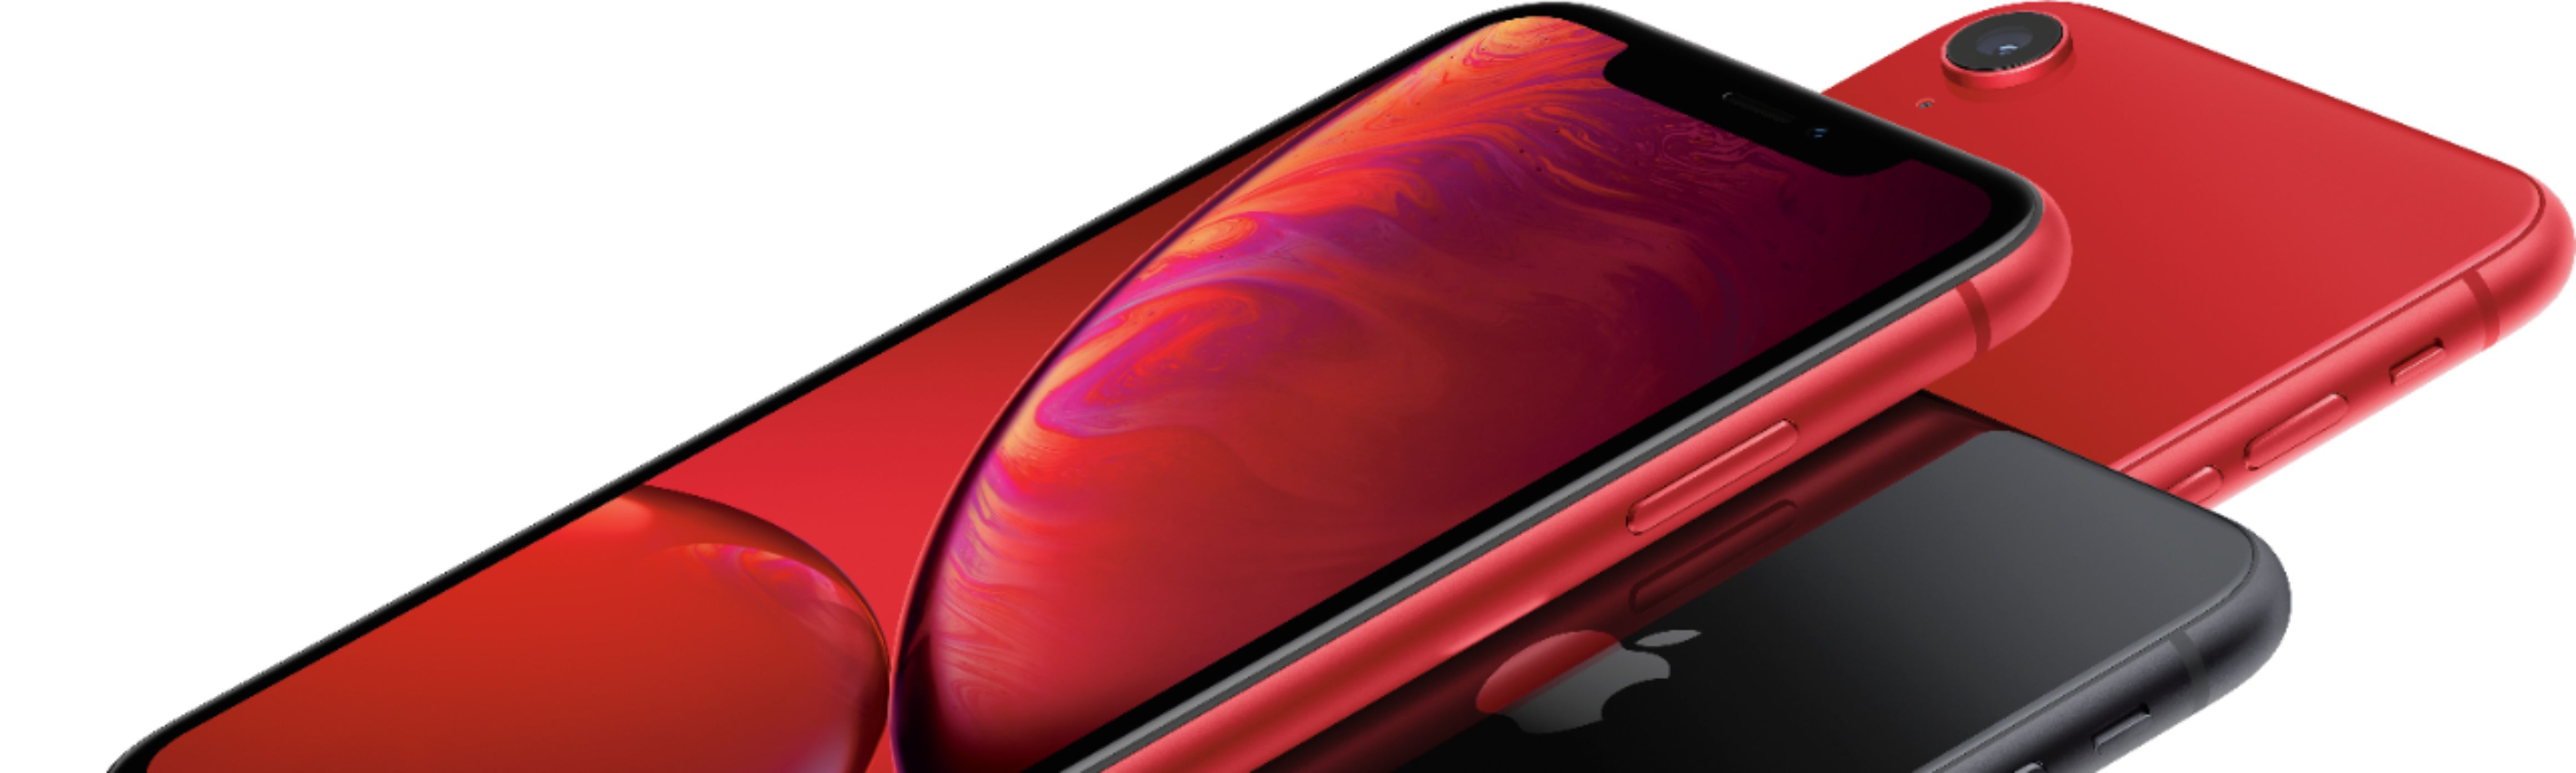 iPhone XR softbank 64GB PRODUCT RED 赤 スマートフォン本体 スマートフォン/携帯電話 家電・スマホ・カメラ 数量限定特価